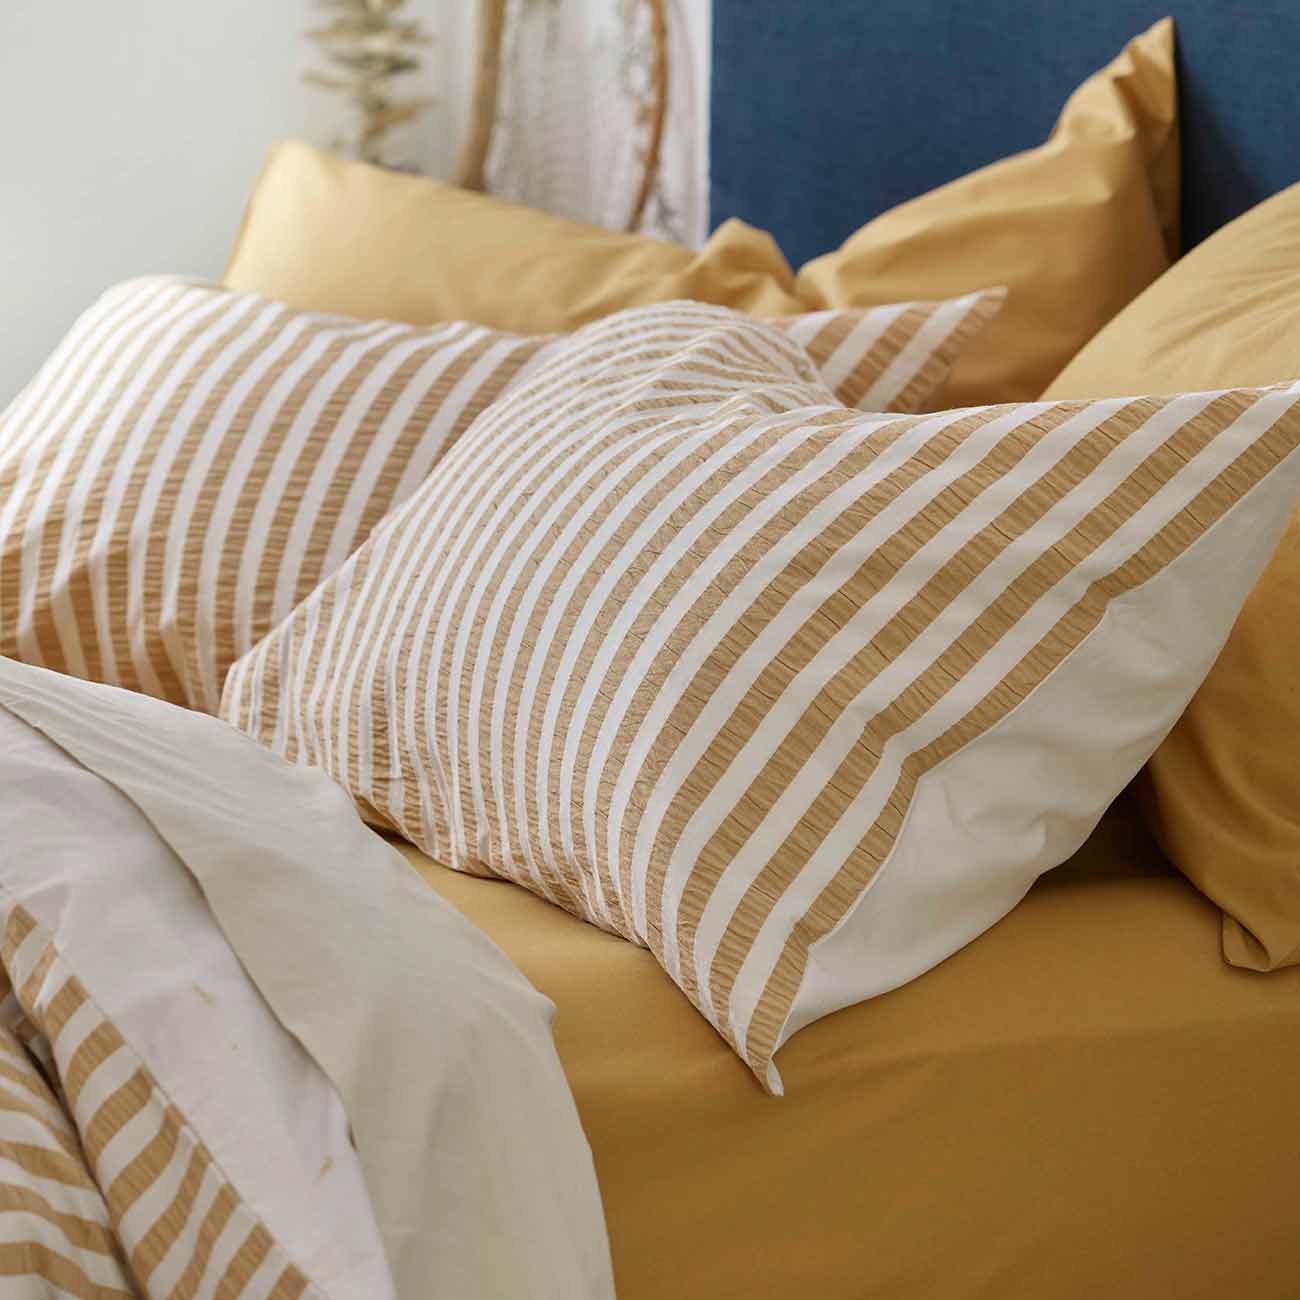 Ochre Seersucker Stripe Cotton Pillowcases (Pair)